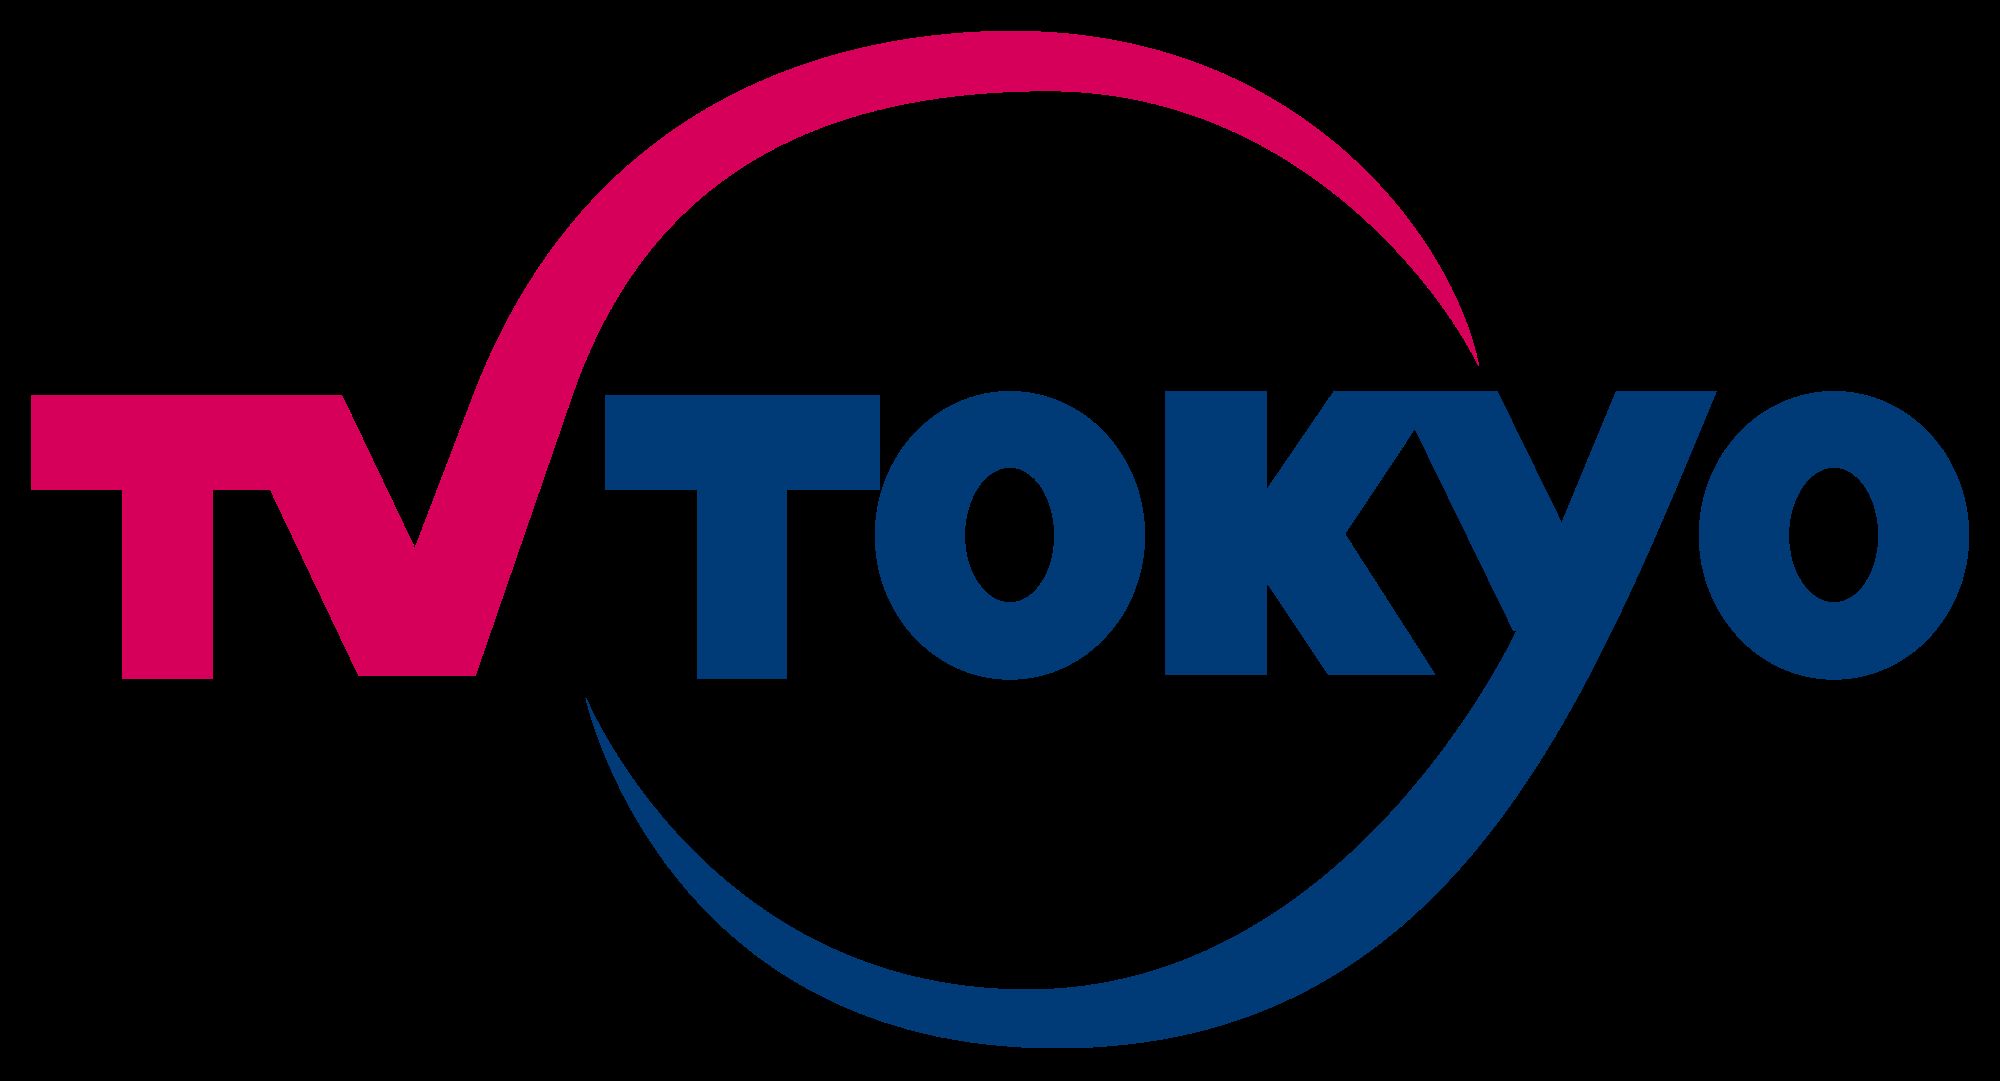 Токийский канал. ТВ Токио. Канал TV Tokyo. Спонсор TV Tokyo. TV Tokyo логотип.